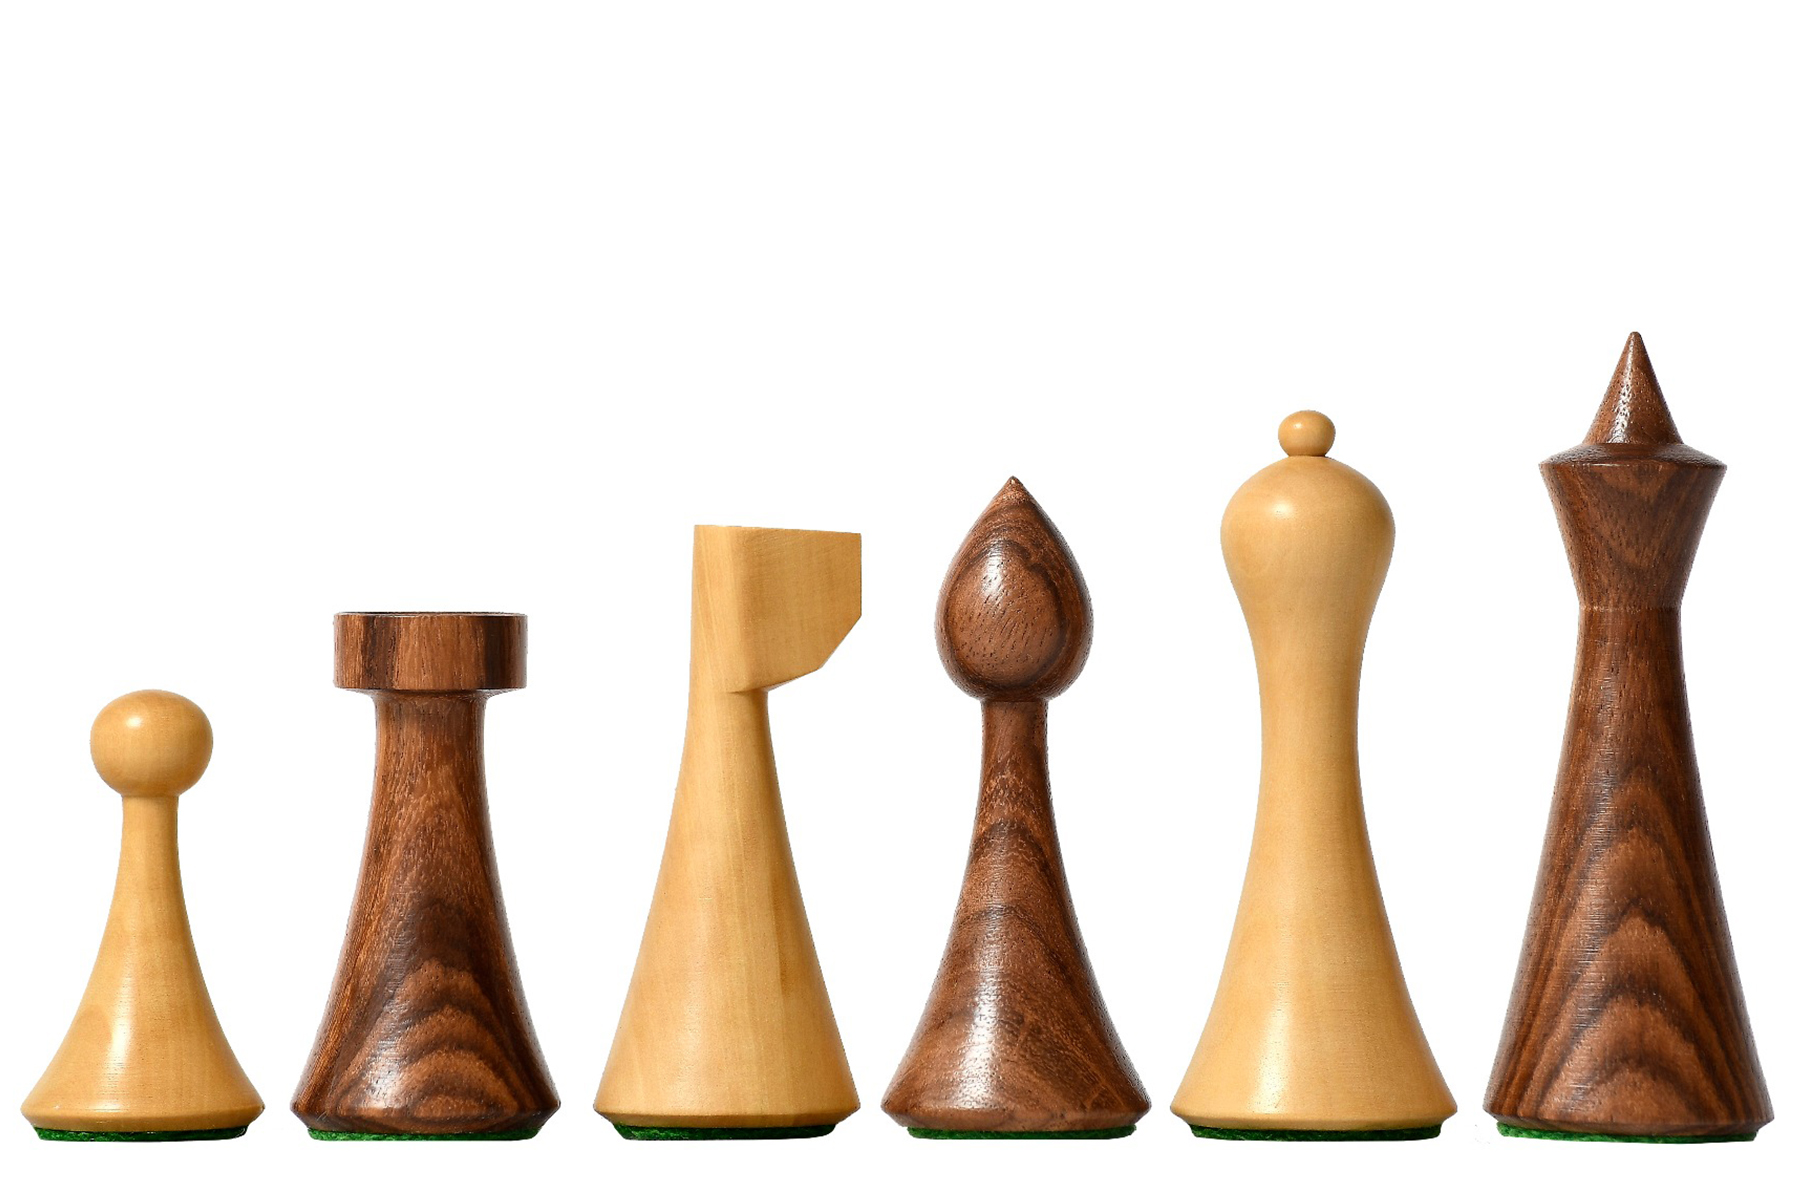 French Lardy Chess Pieces Staunton Sheesham Boxwood 3.75" 